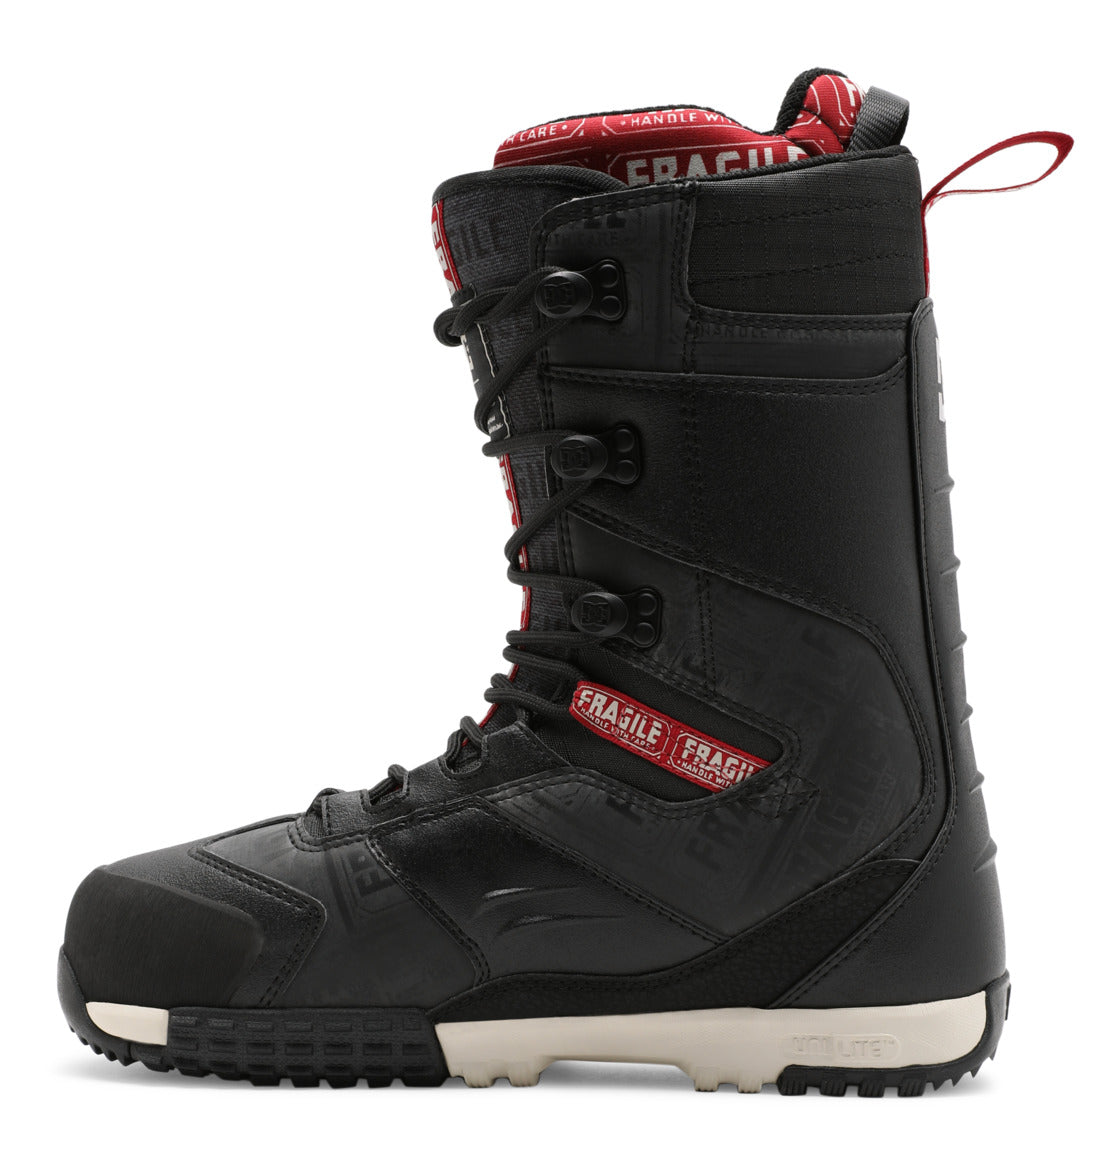 Men's Andy Warhol x DC Shoes BOA® Premiere Hybrid Snowboard Boots - DC Shoes